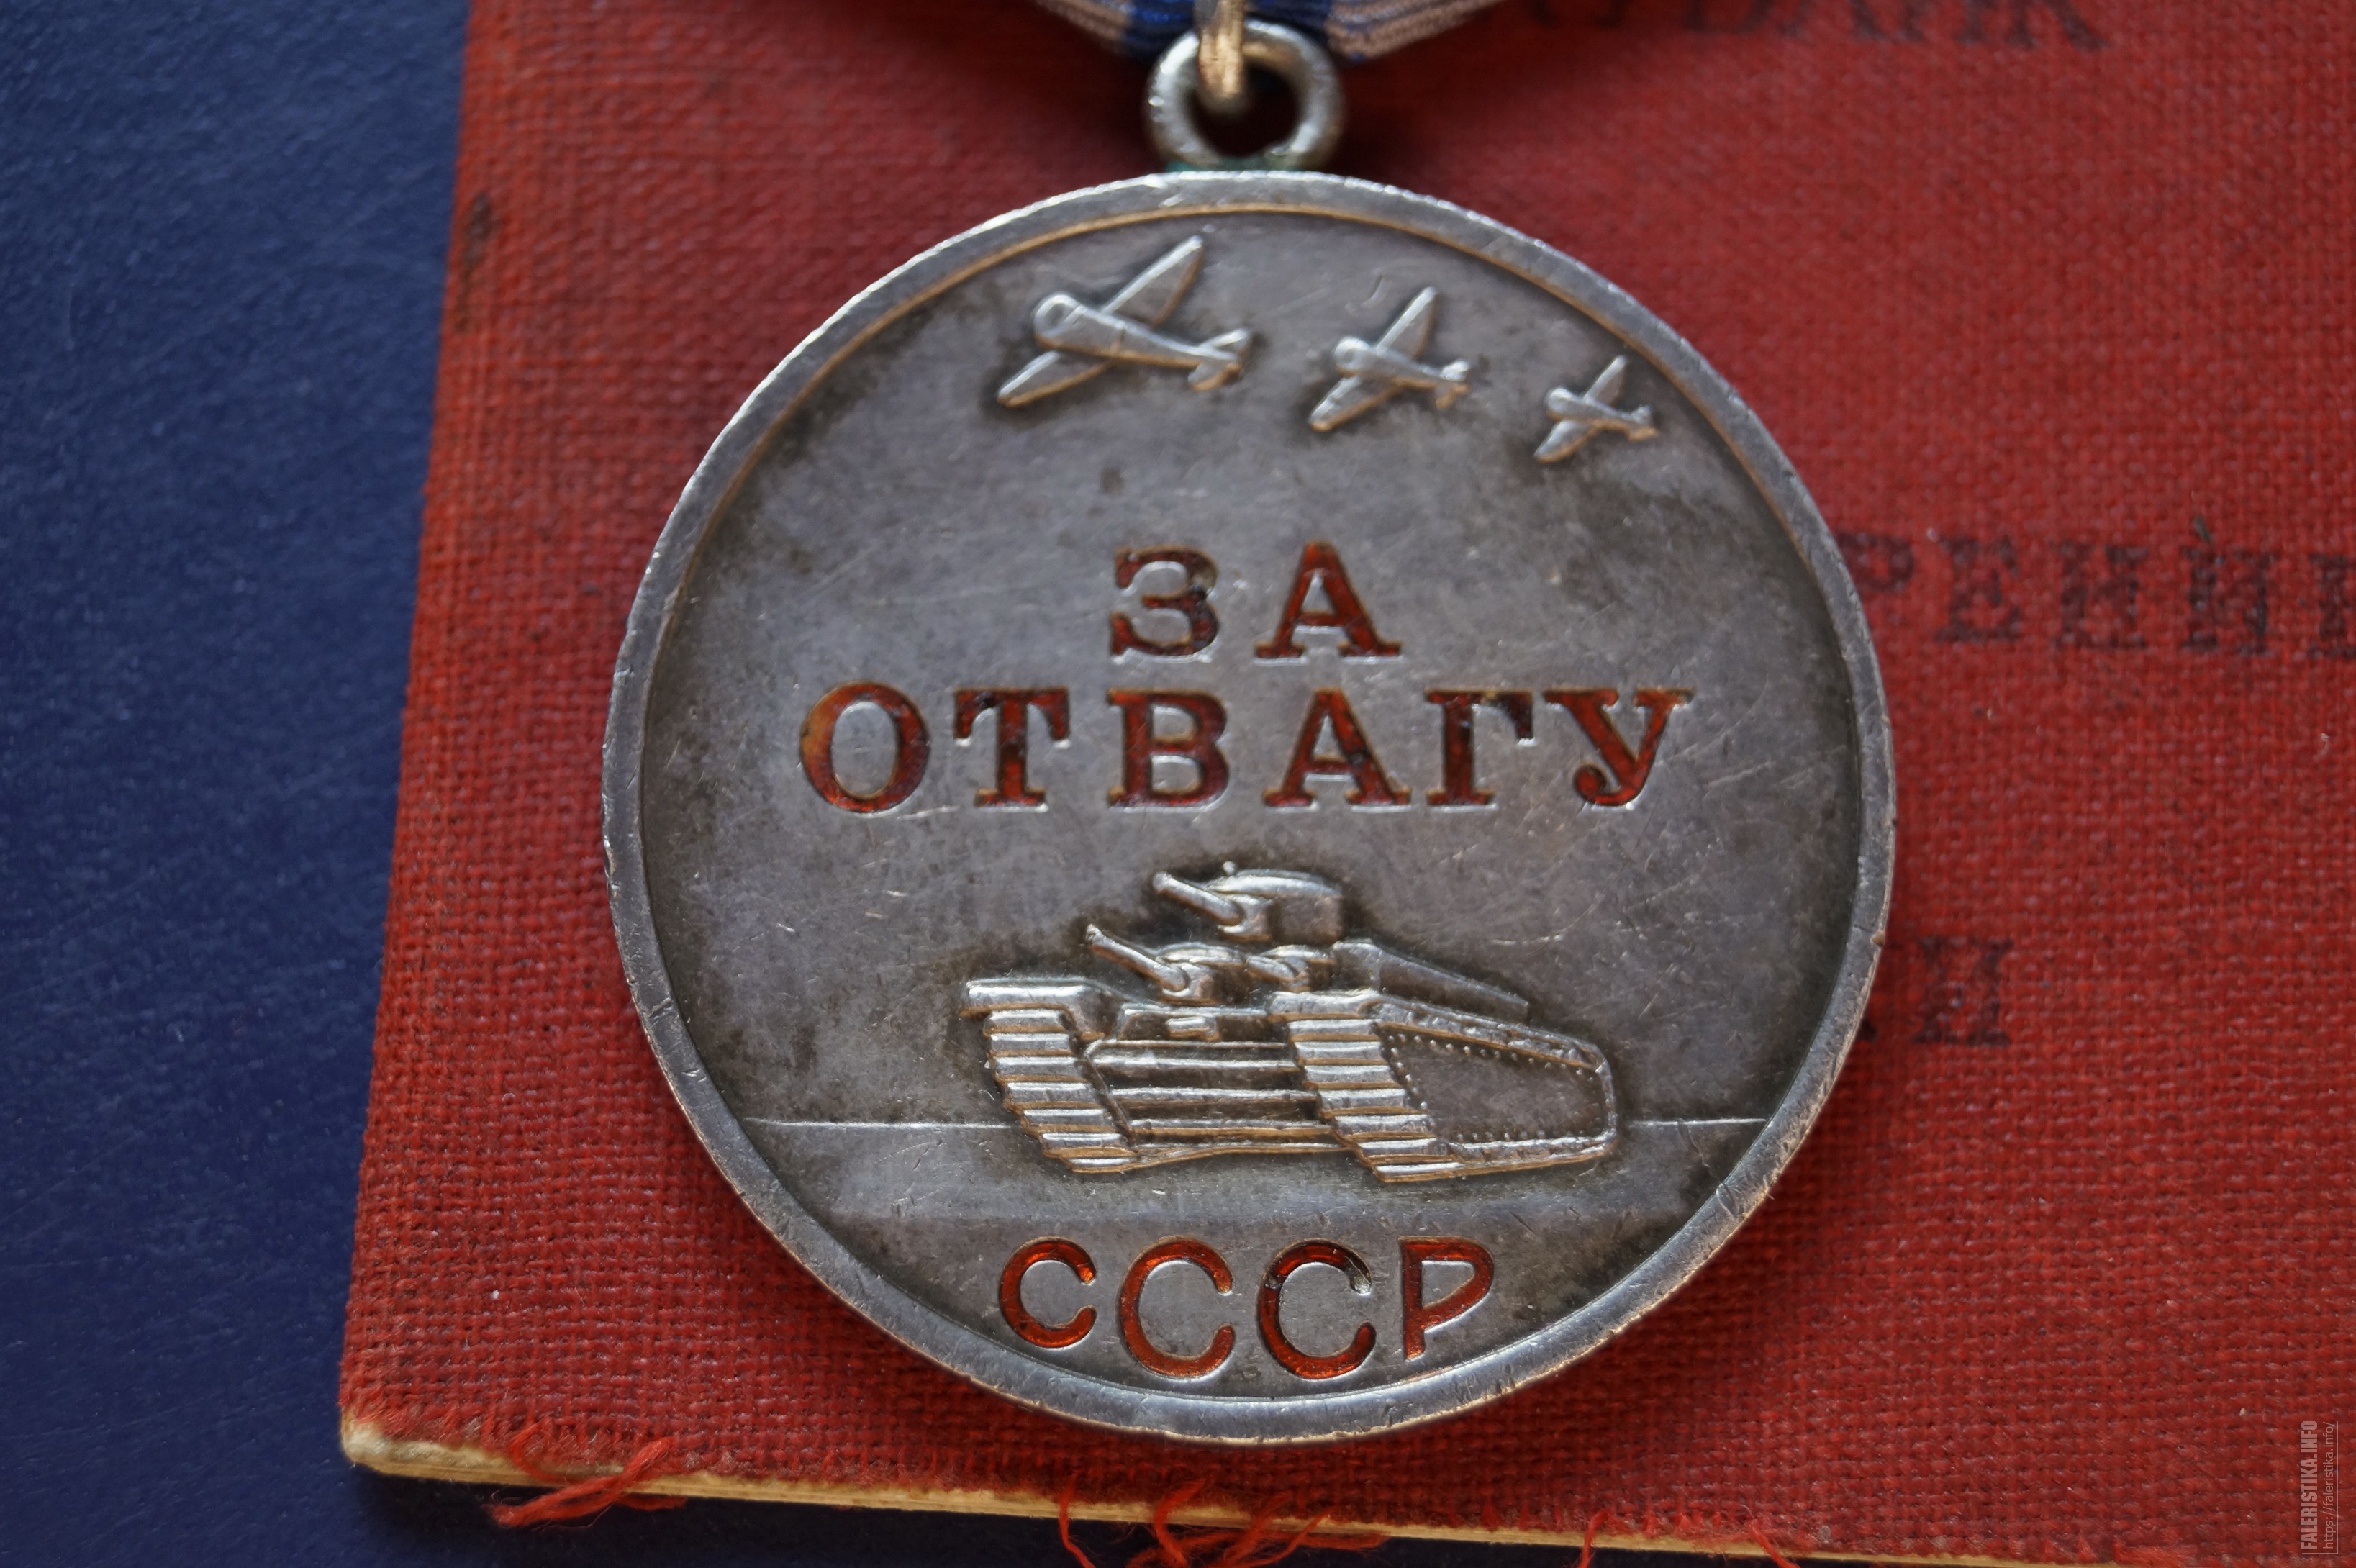 Отвага за афганистан. Медаль Афганистан за отвагу. Медаль за отвагу Россия. Медаль за отвагу 1994. Ордена афганцам за отвагу.